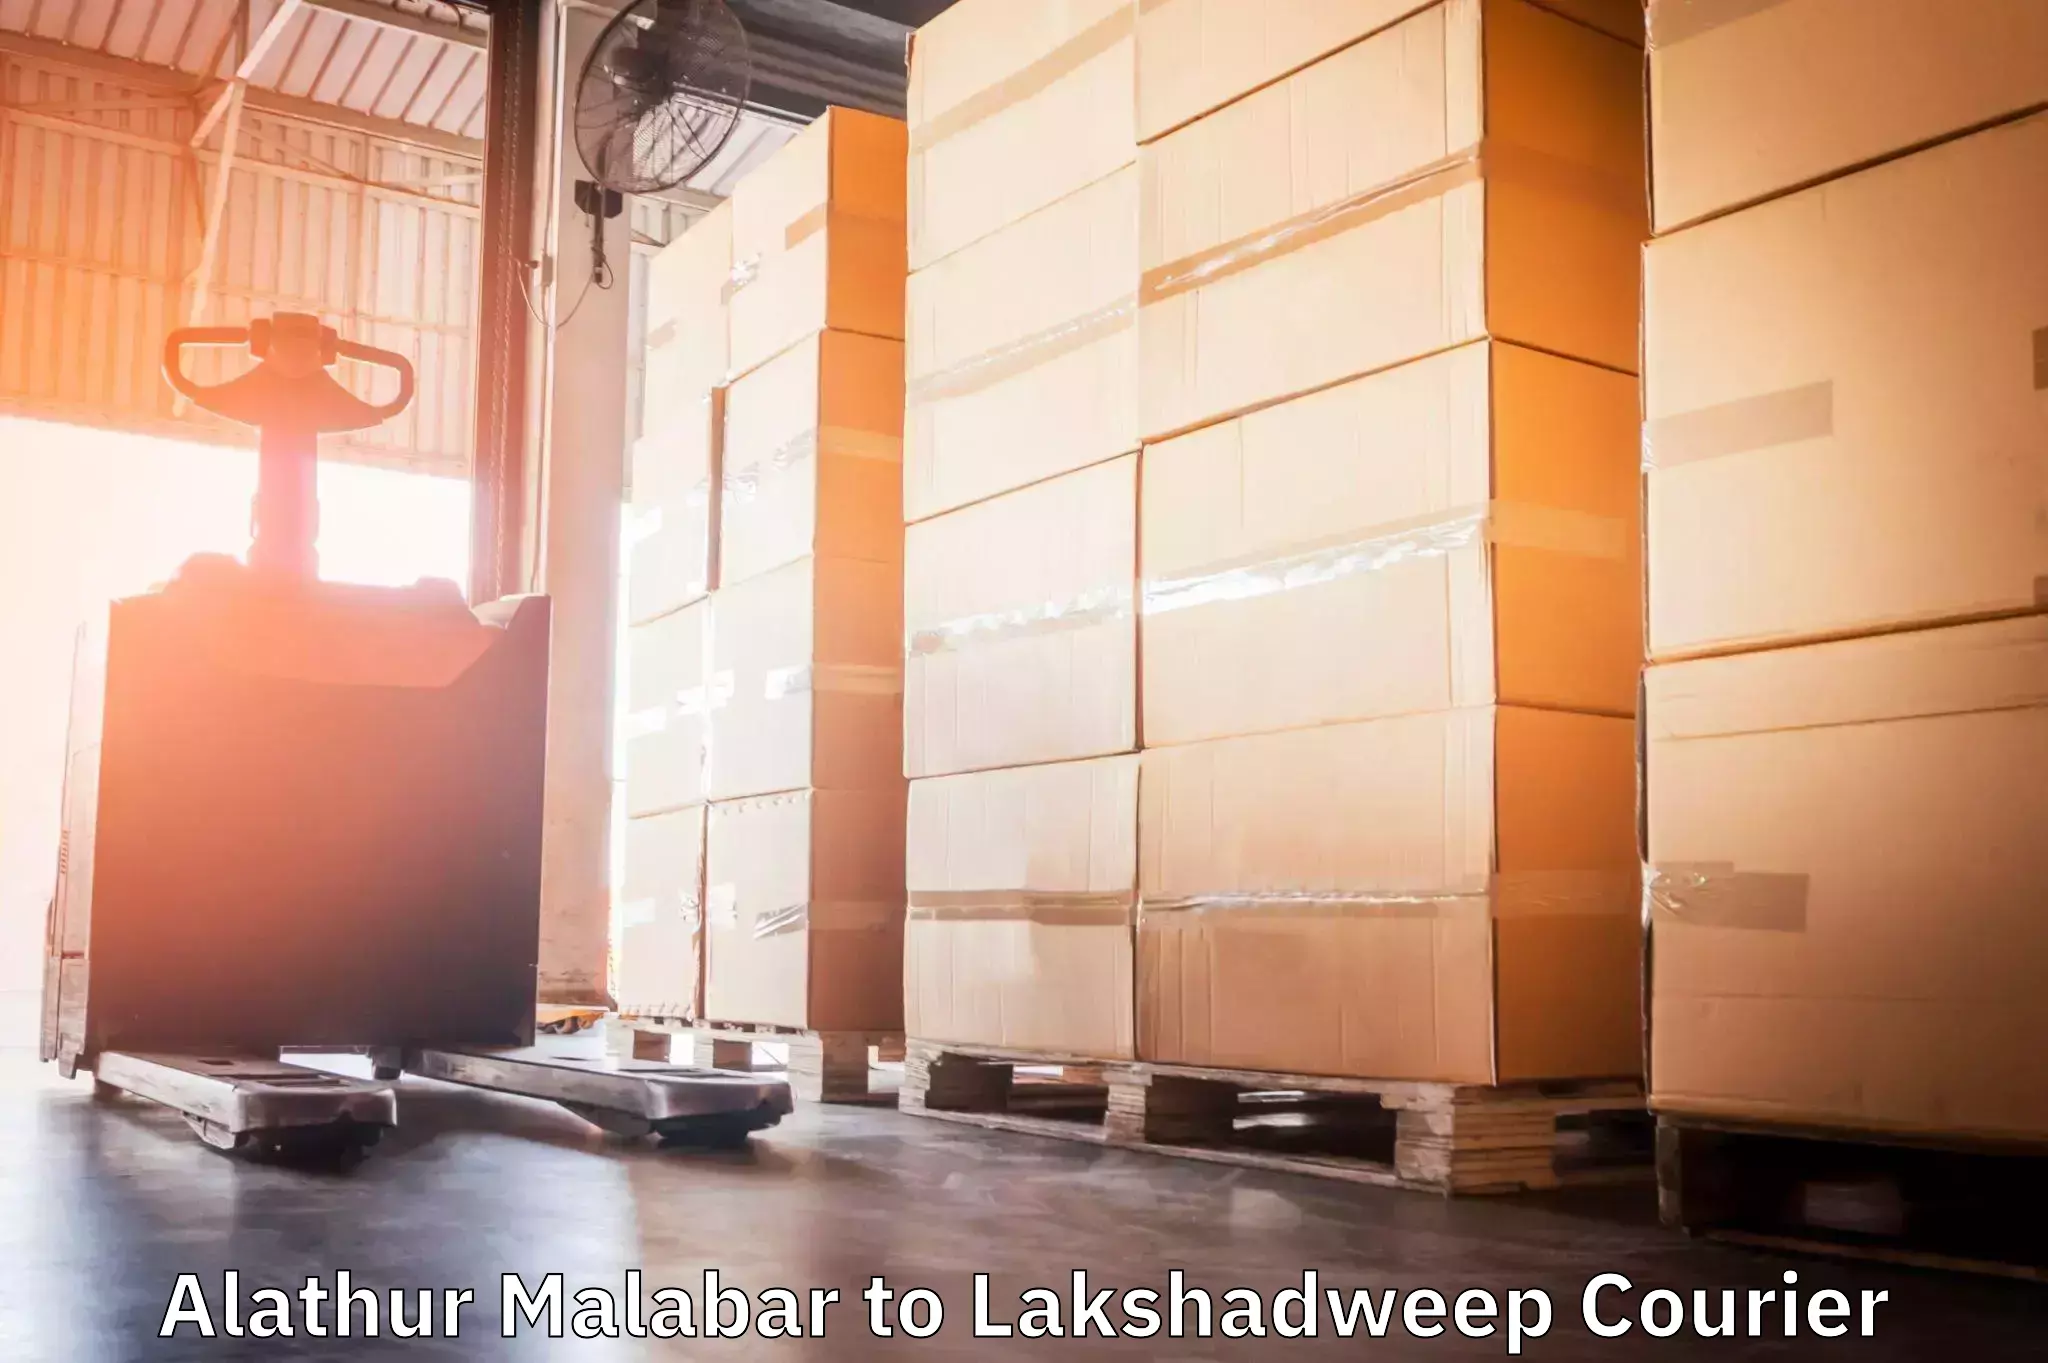 Tech-enabled shipping Alathur Malabar to Lakshadweep